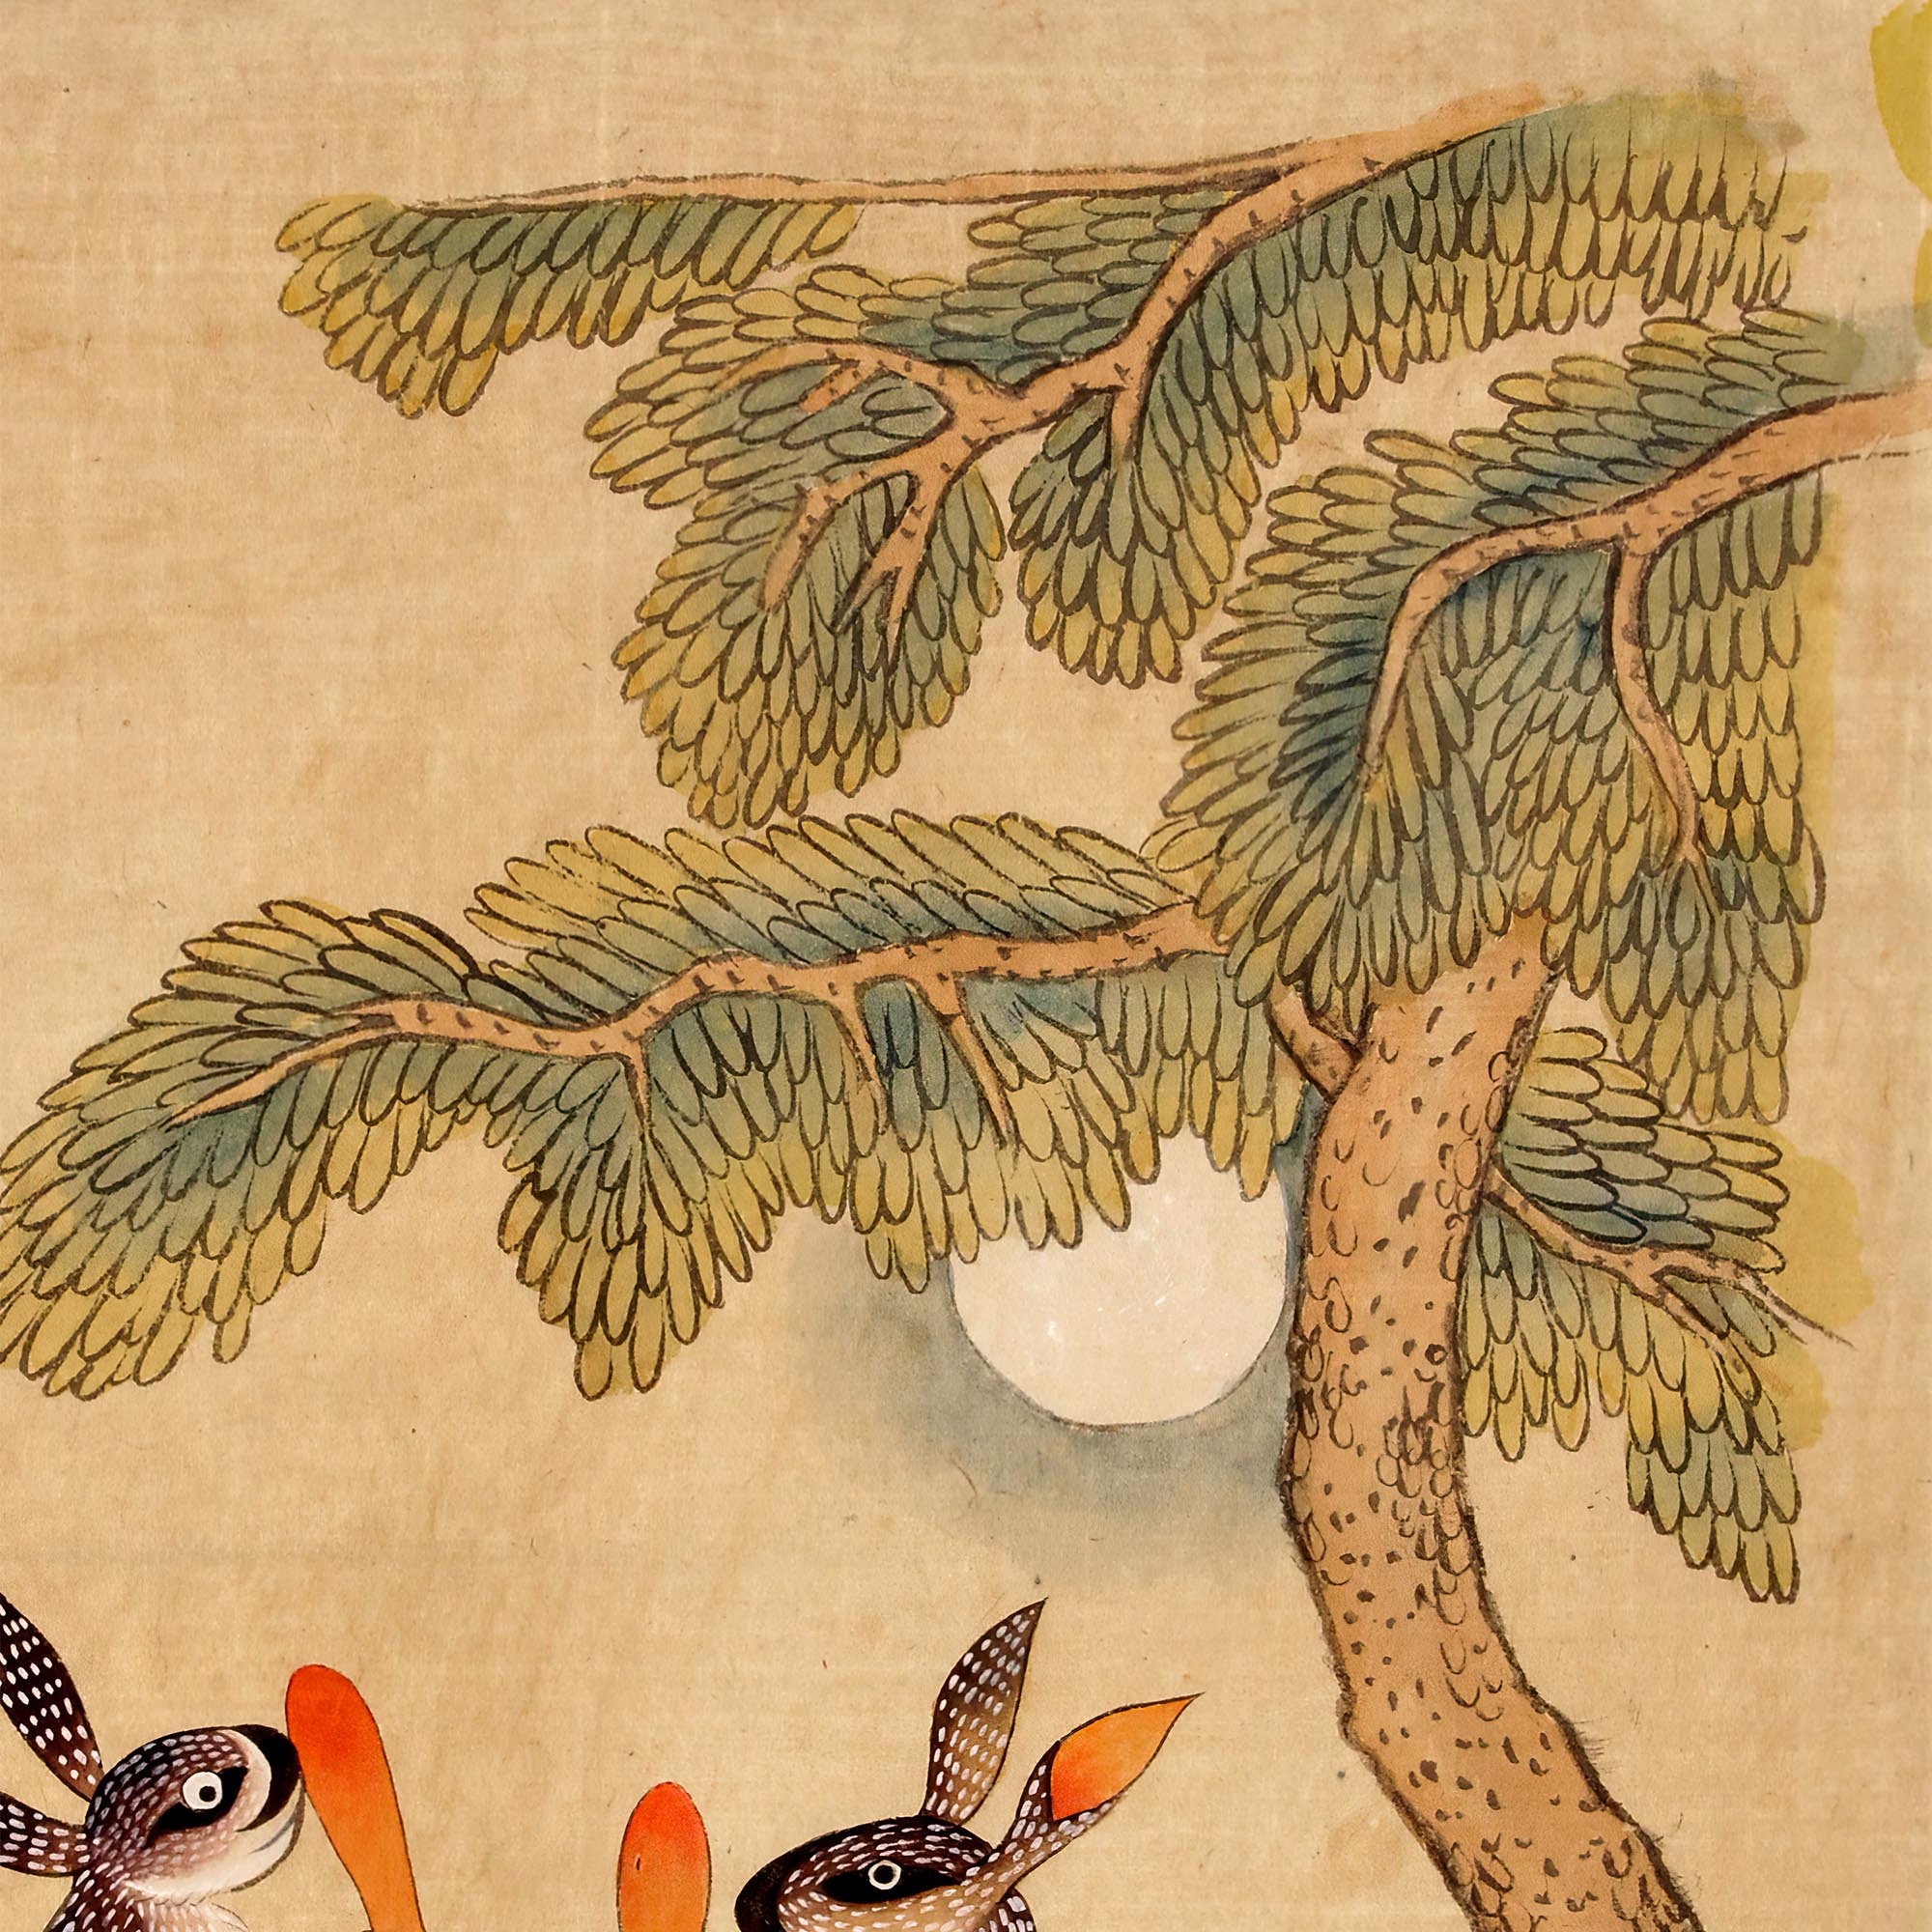 giclee Moon Bunny of Immortality | Classic Minhwa Korean Mythology Folk Art | Lunar Cosmos Astronomy Rabbit | Cute Kawaii Fine Art Print